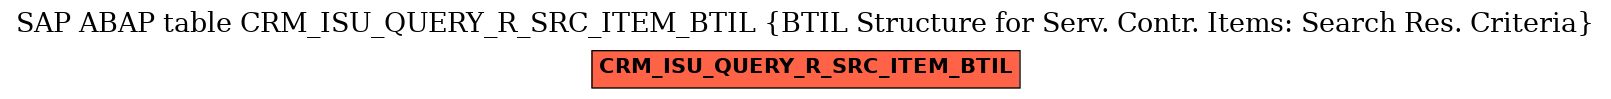 E-R Diagram for table CRM_ISU_QUERY_R_SRC_ITEM_BTIL (BTIL Structure for Serv. Contr. Items: Search Res. Criteria)